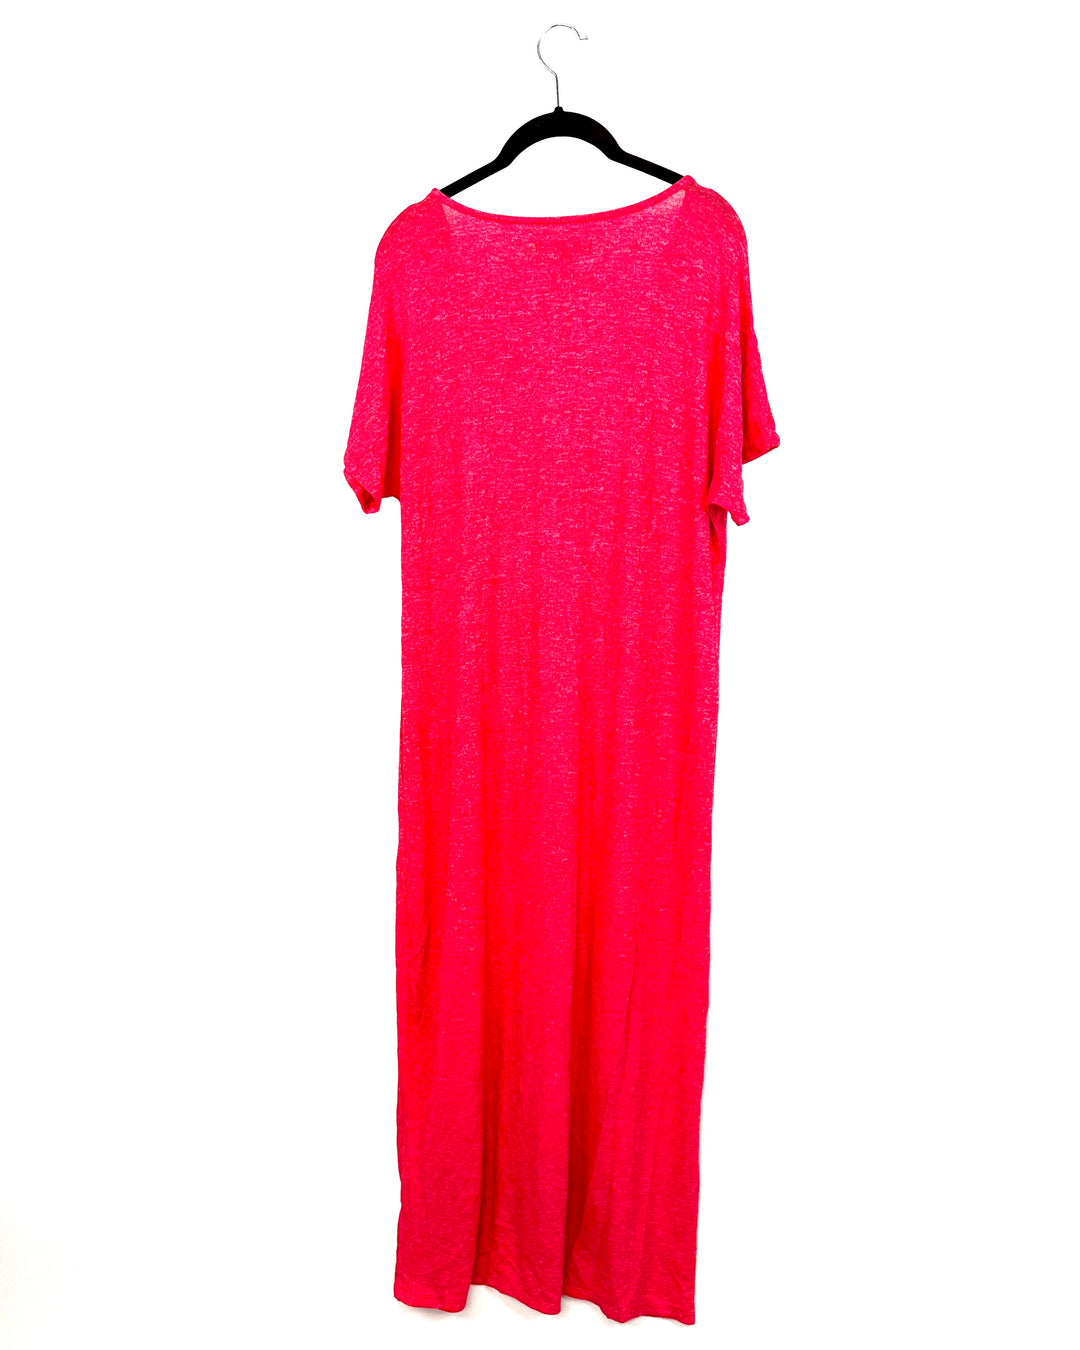 Heathered Red Lounge Dress - Size 6-8